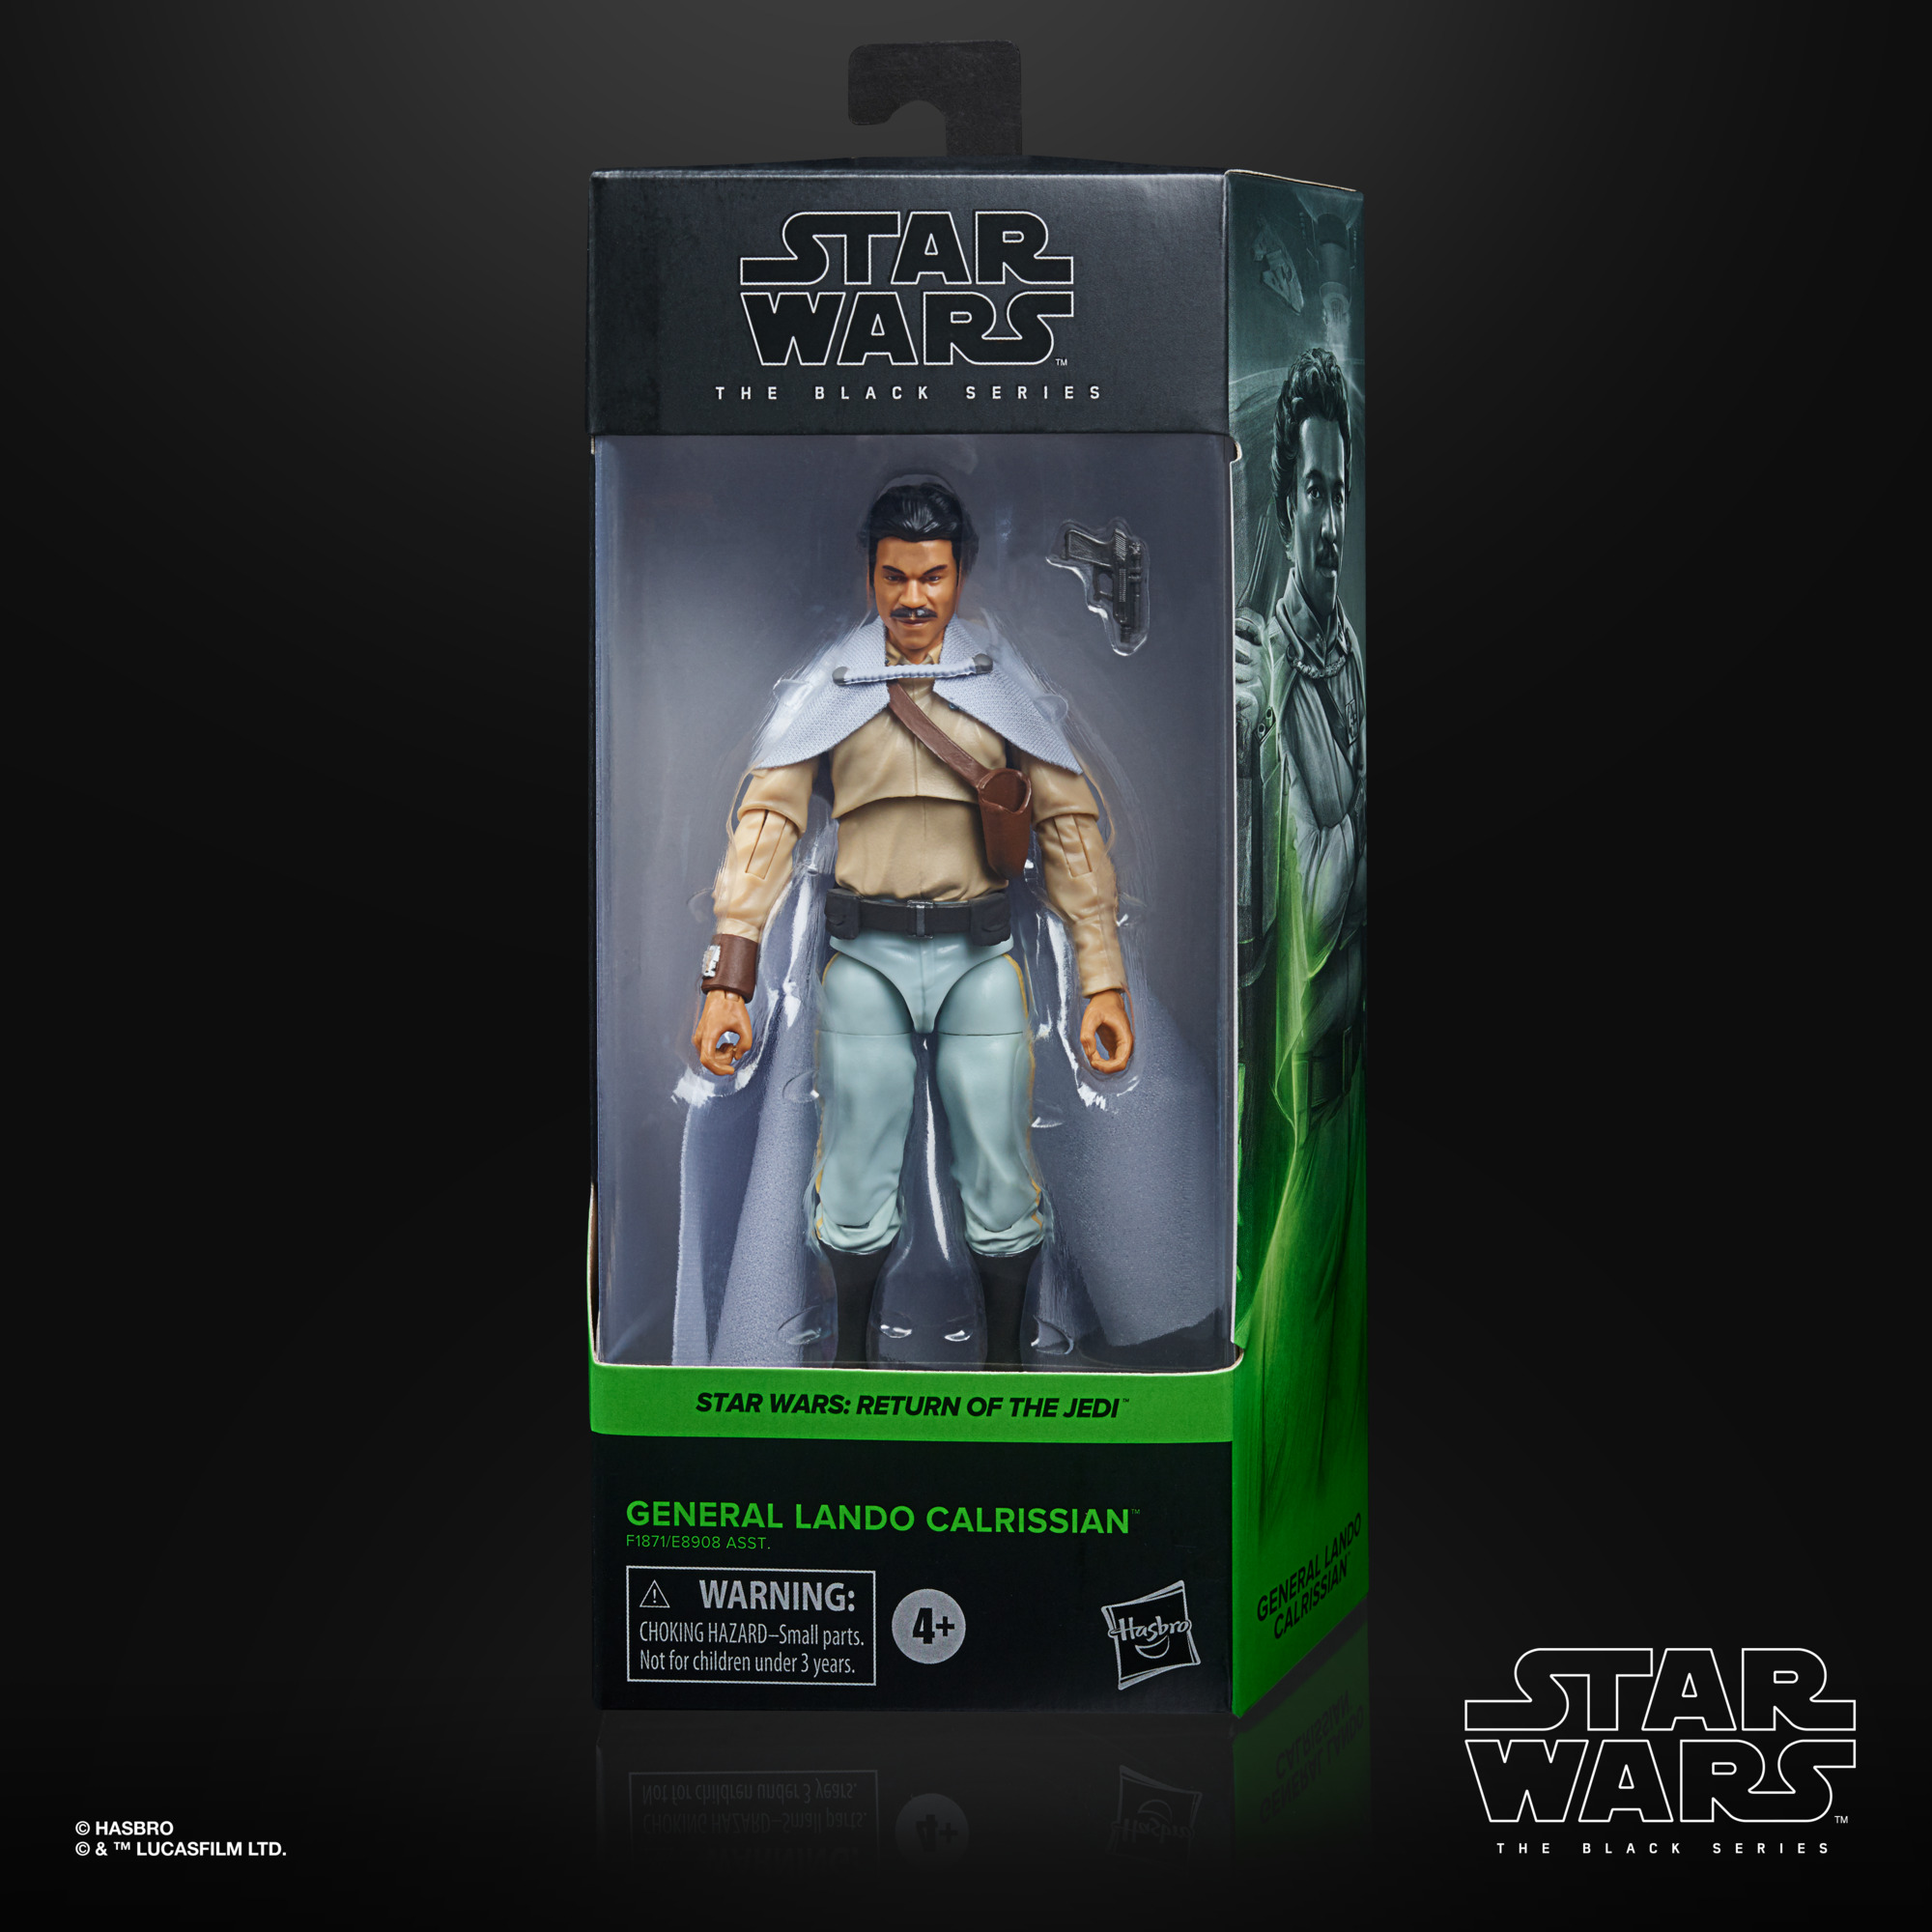 Star Wars The Black Series General Lando Calrissian Figure 15 cm F1871 5010993828036